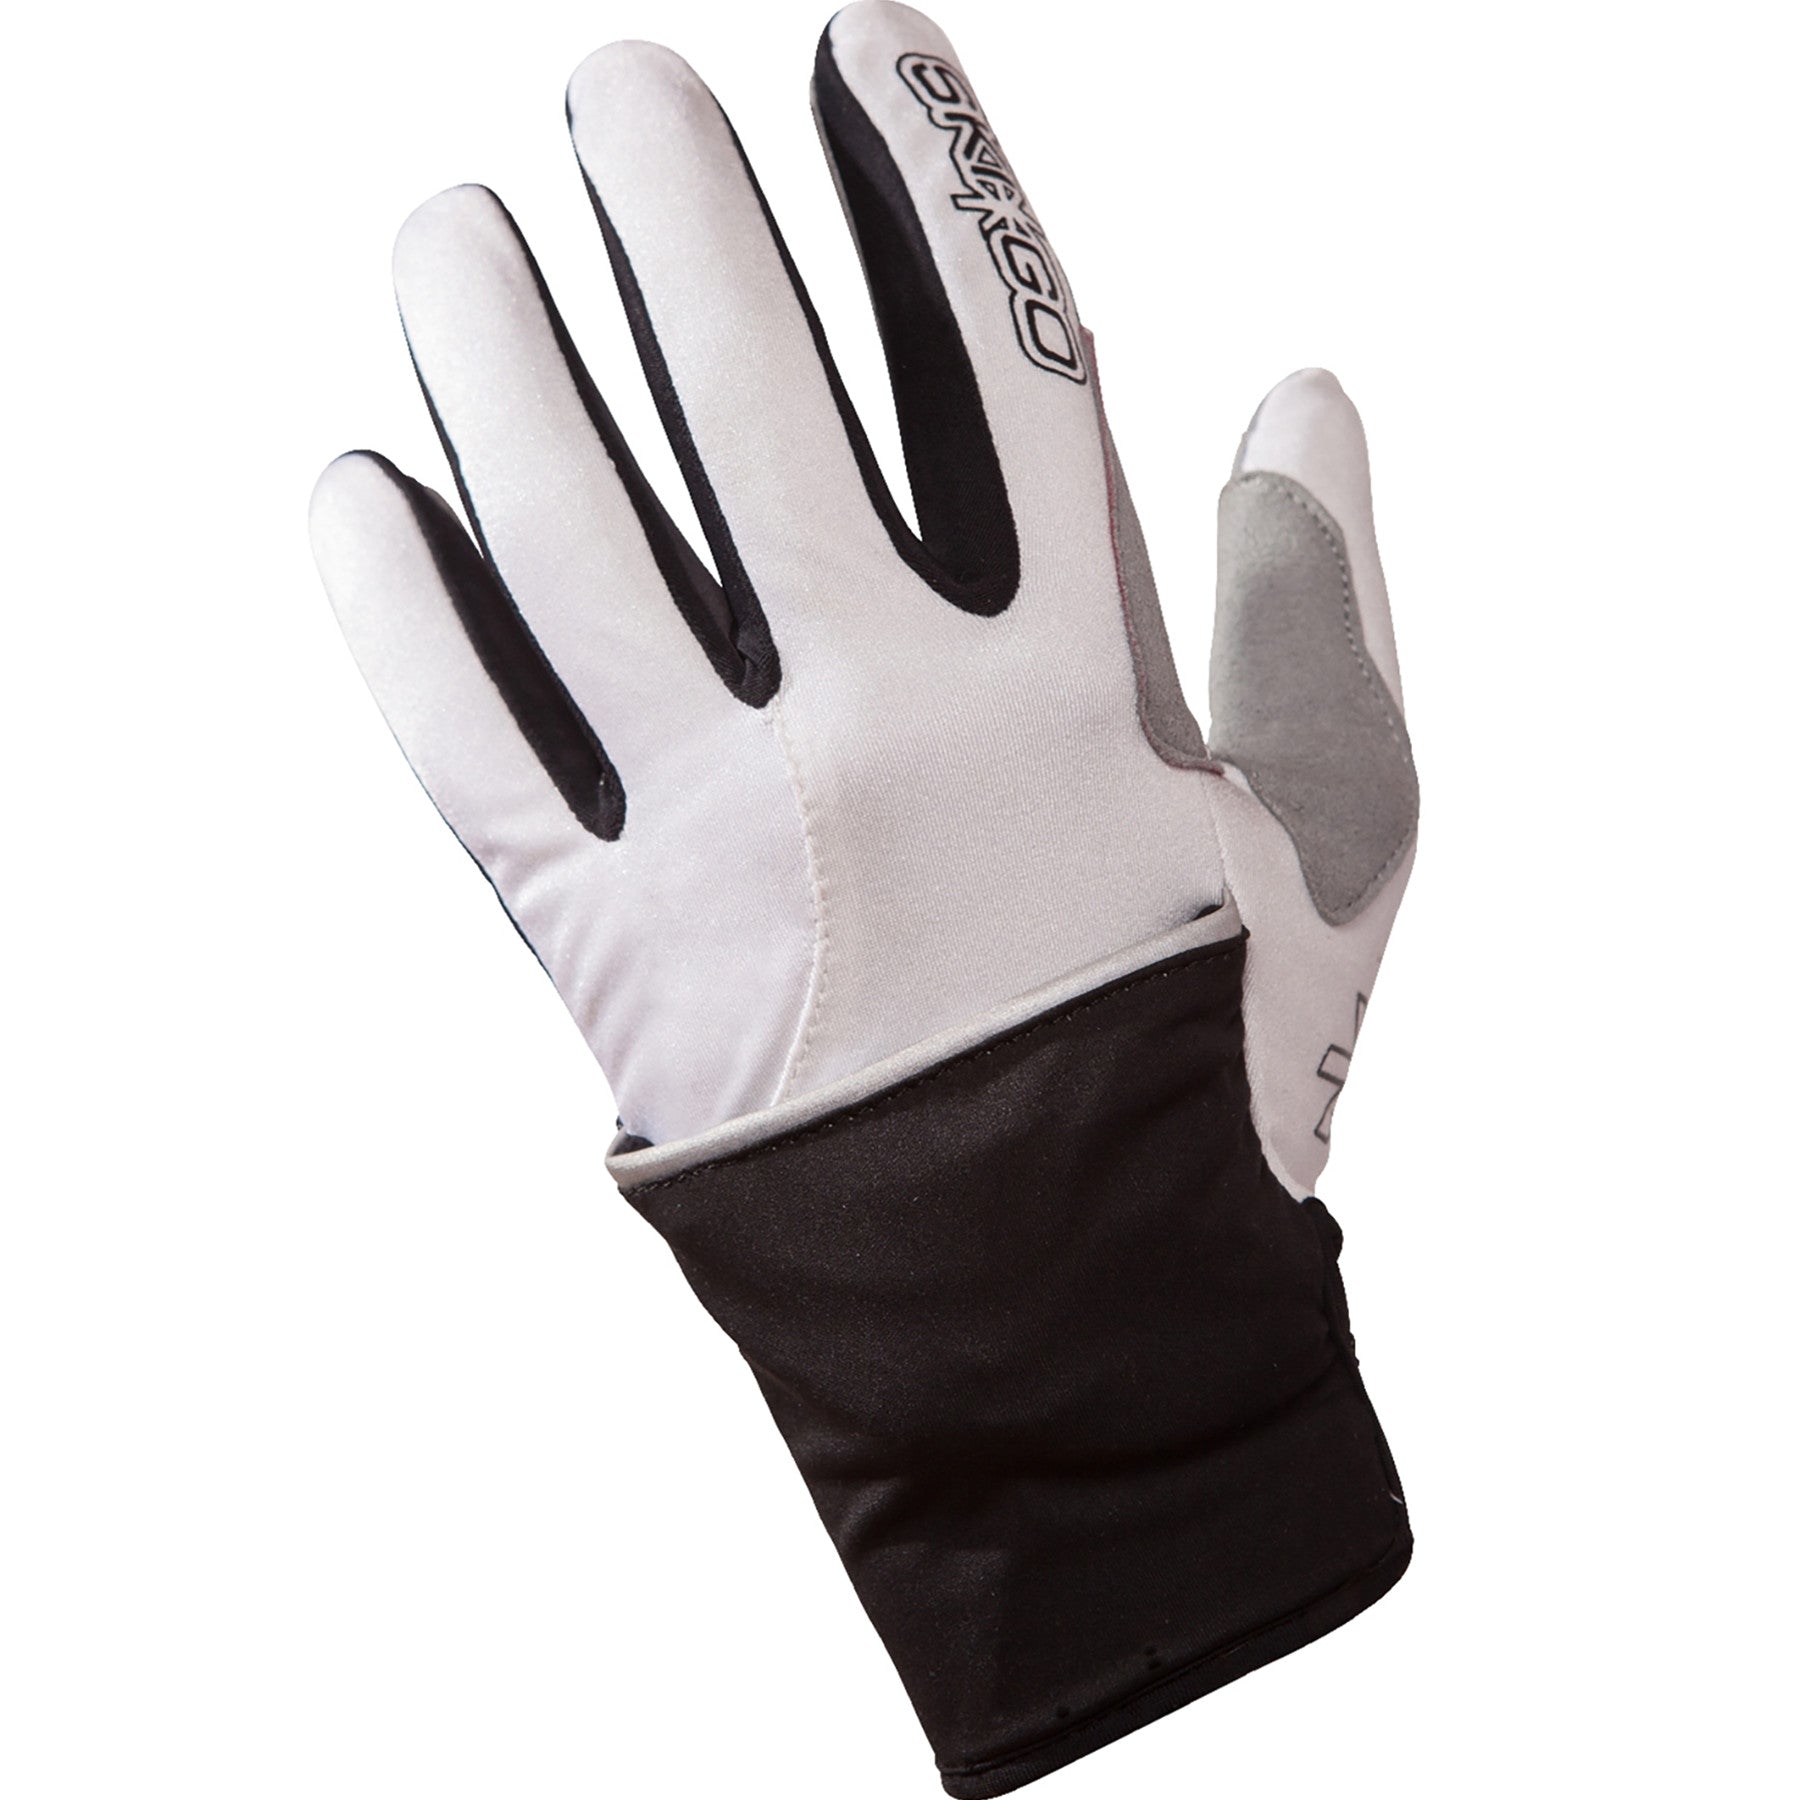 SkiGo Flexible Glove